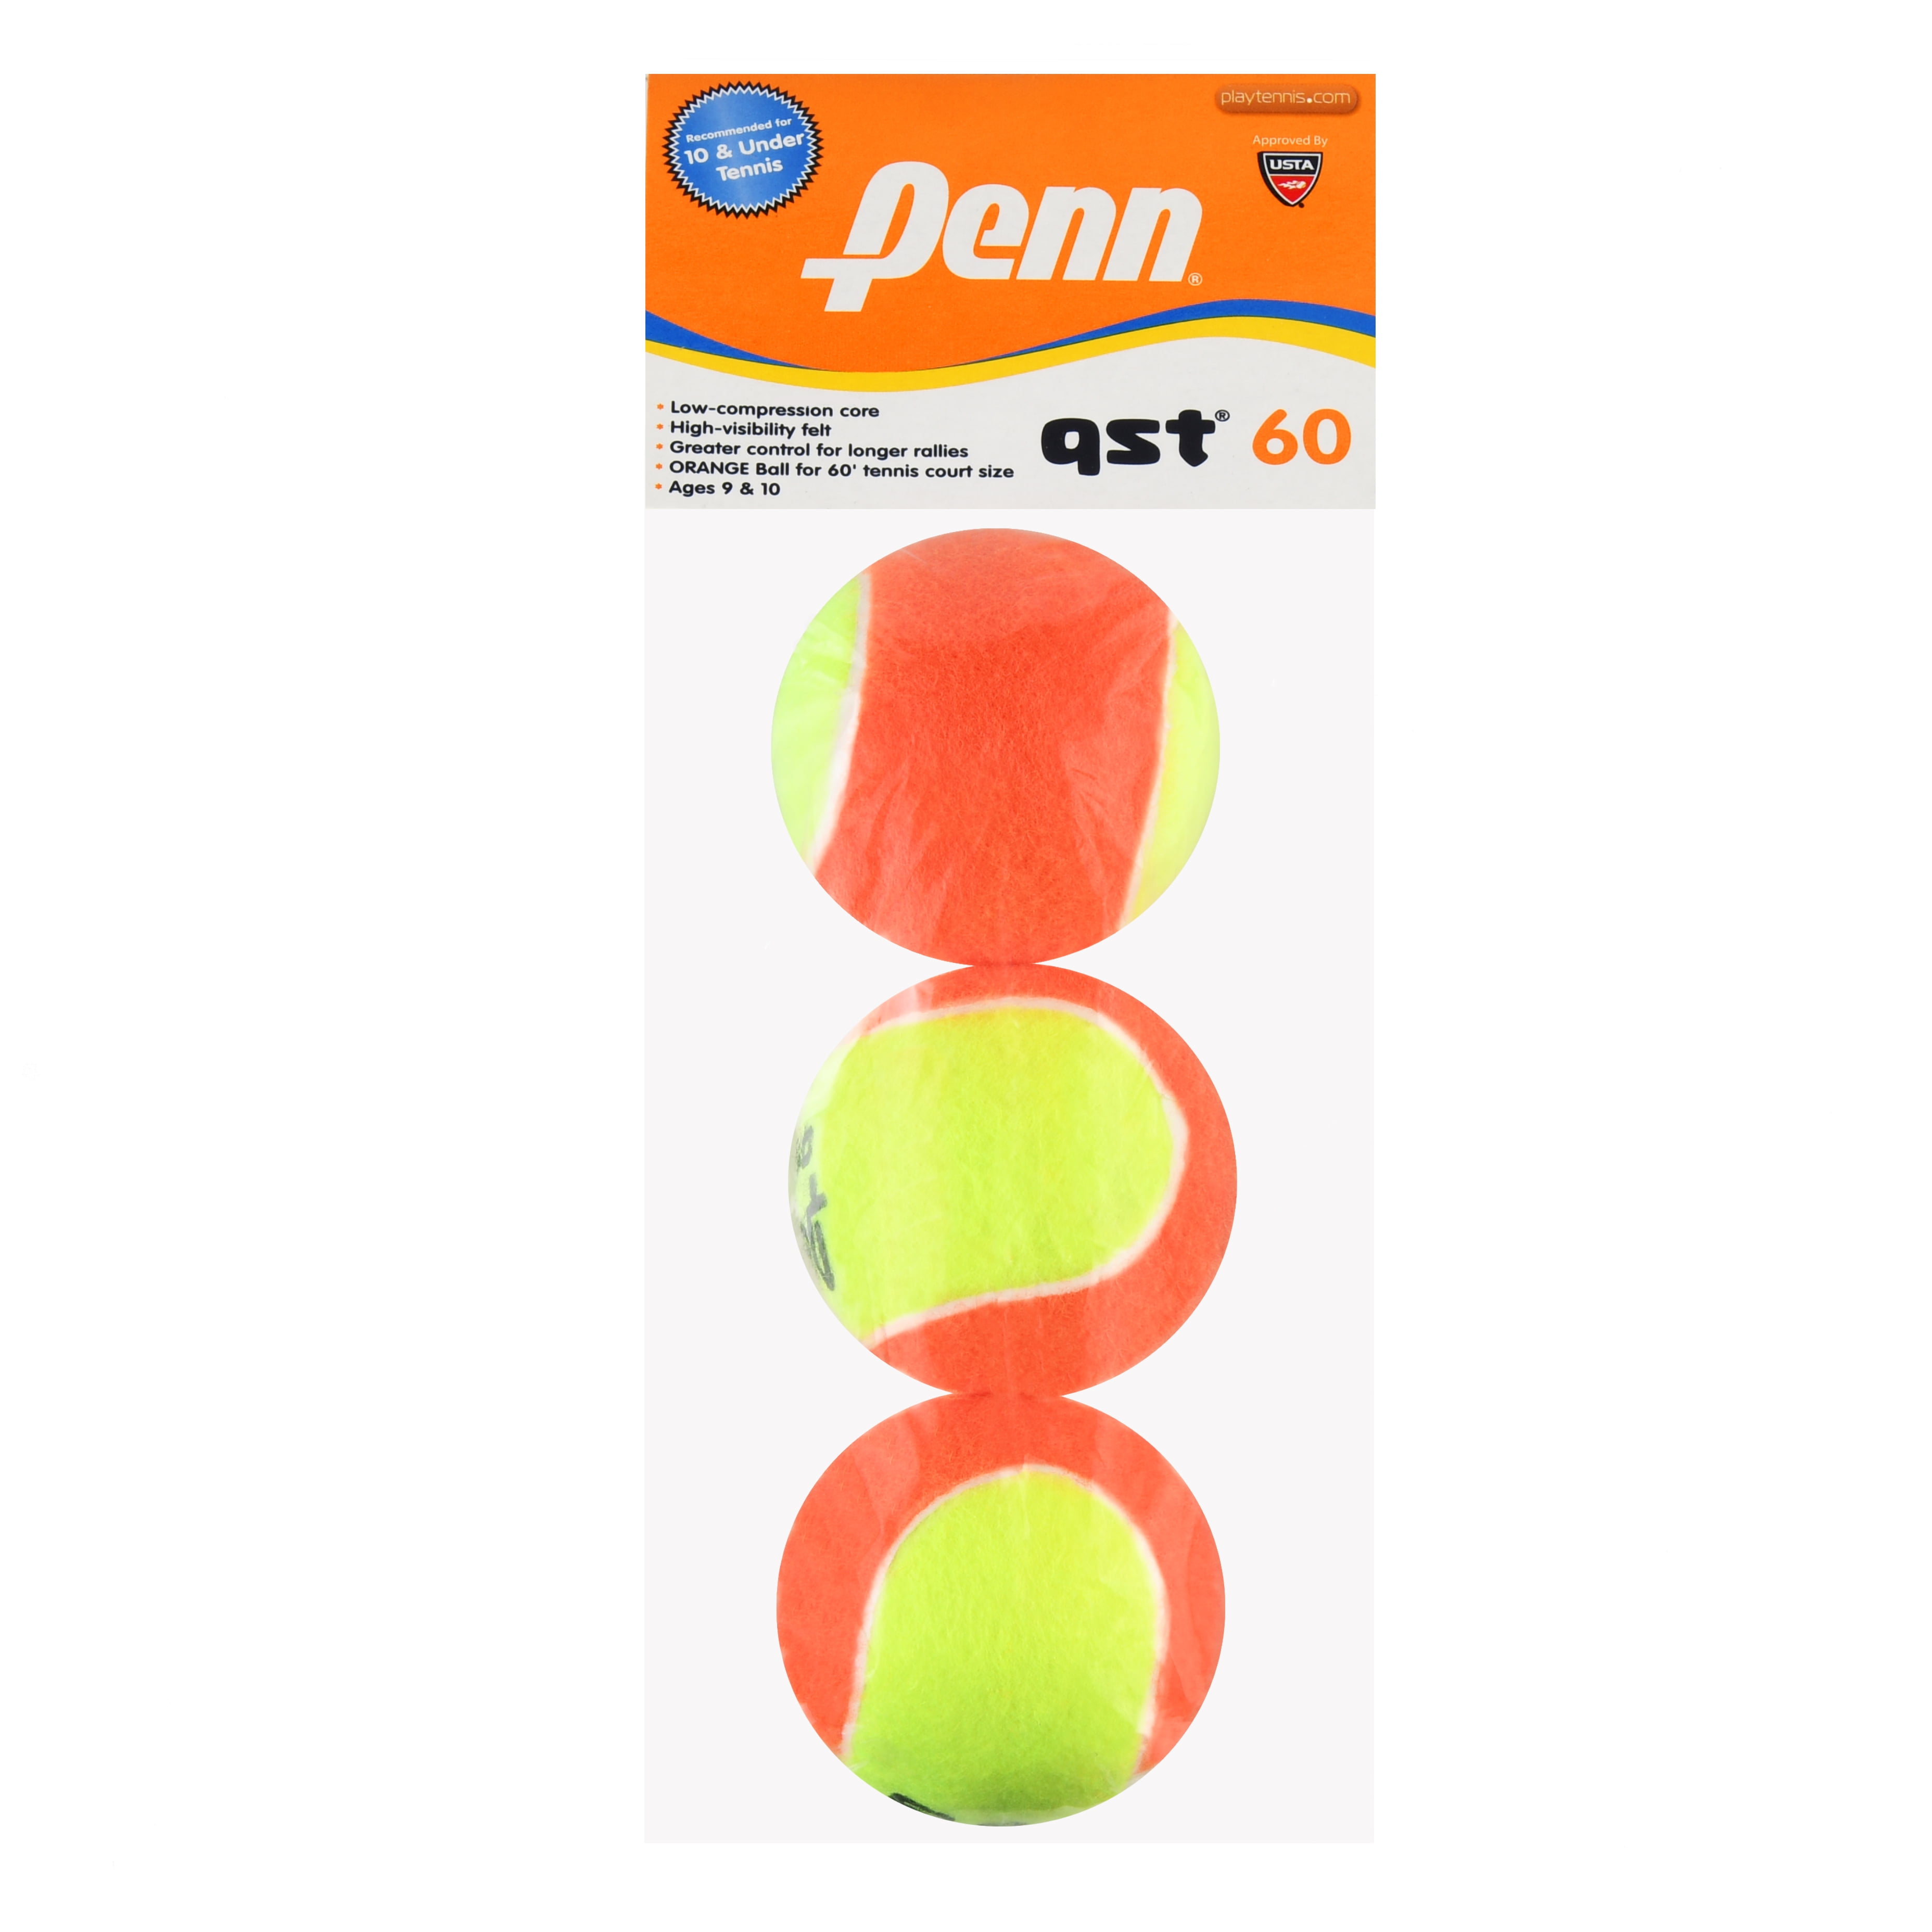 Penn QST 60 Tennis Balls Youth Felt Orange Tennis Balls for Beginners 